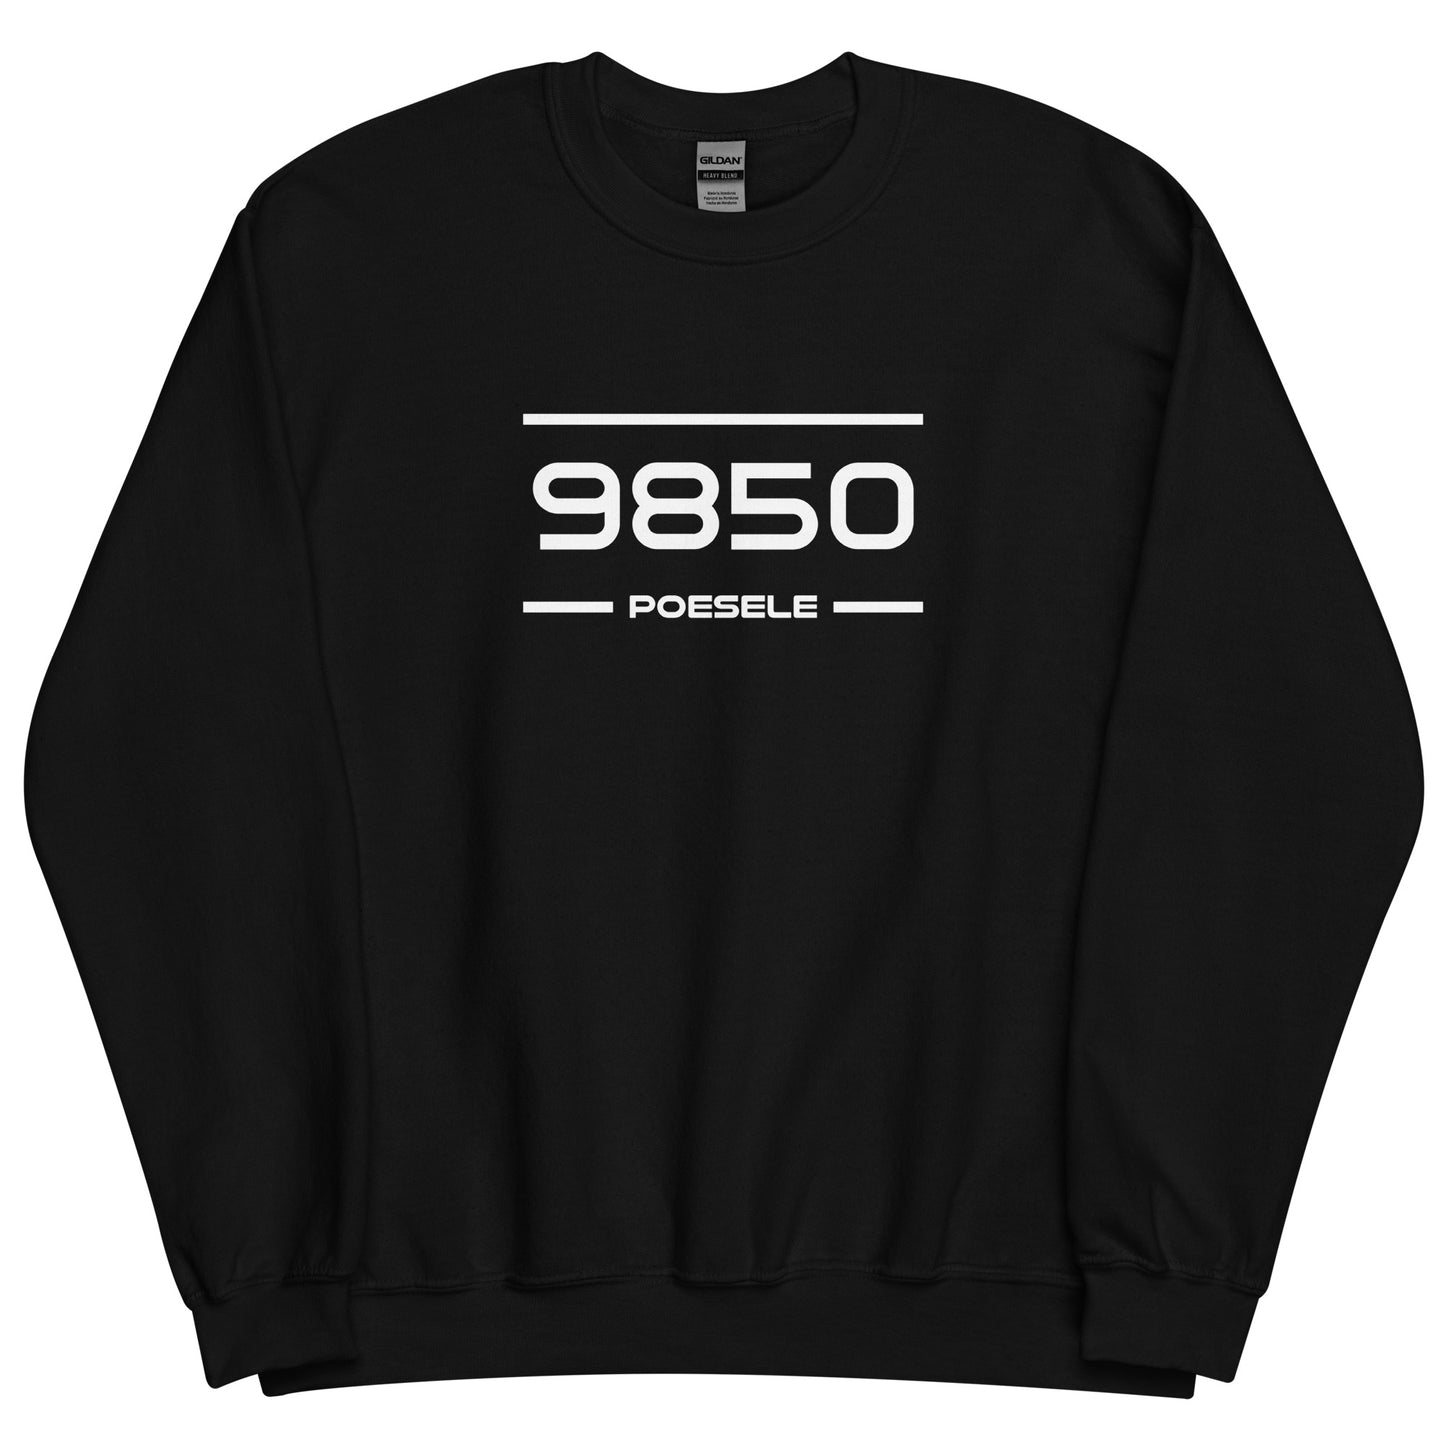 Sweater - 9850 - Poesele (M/V)